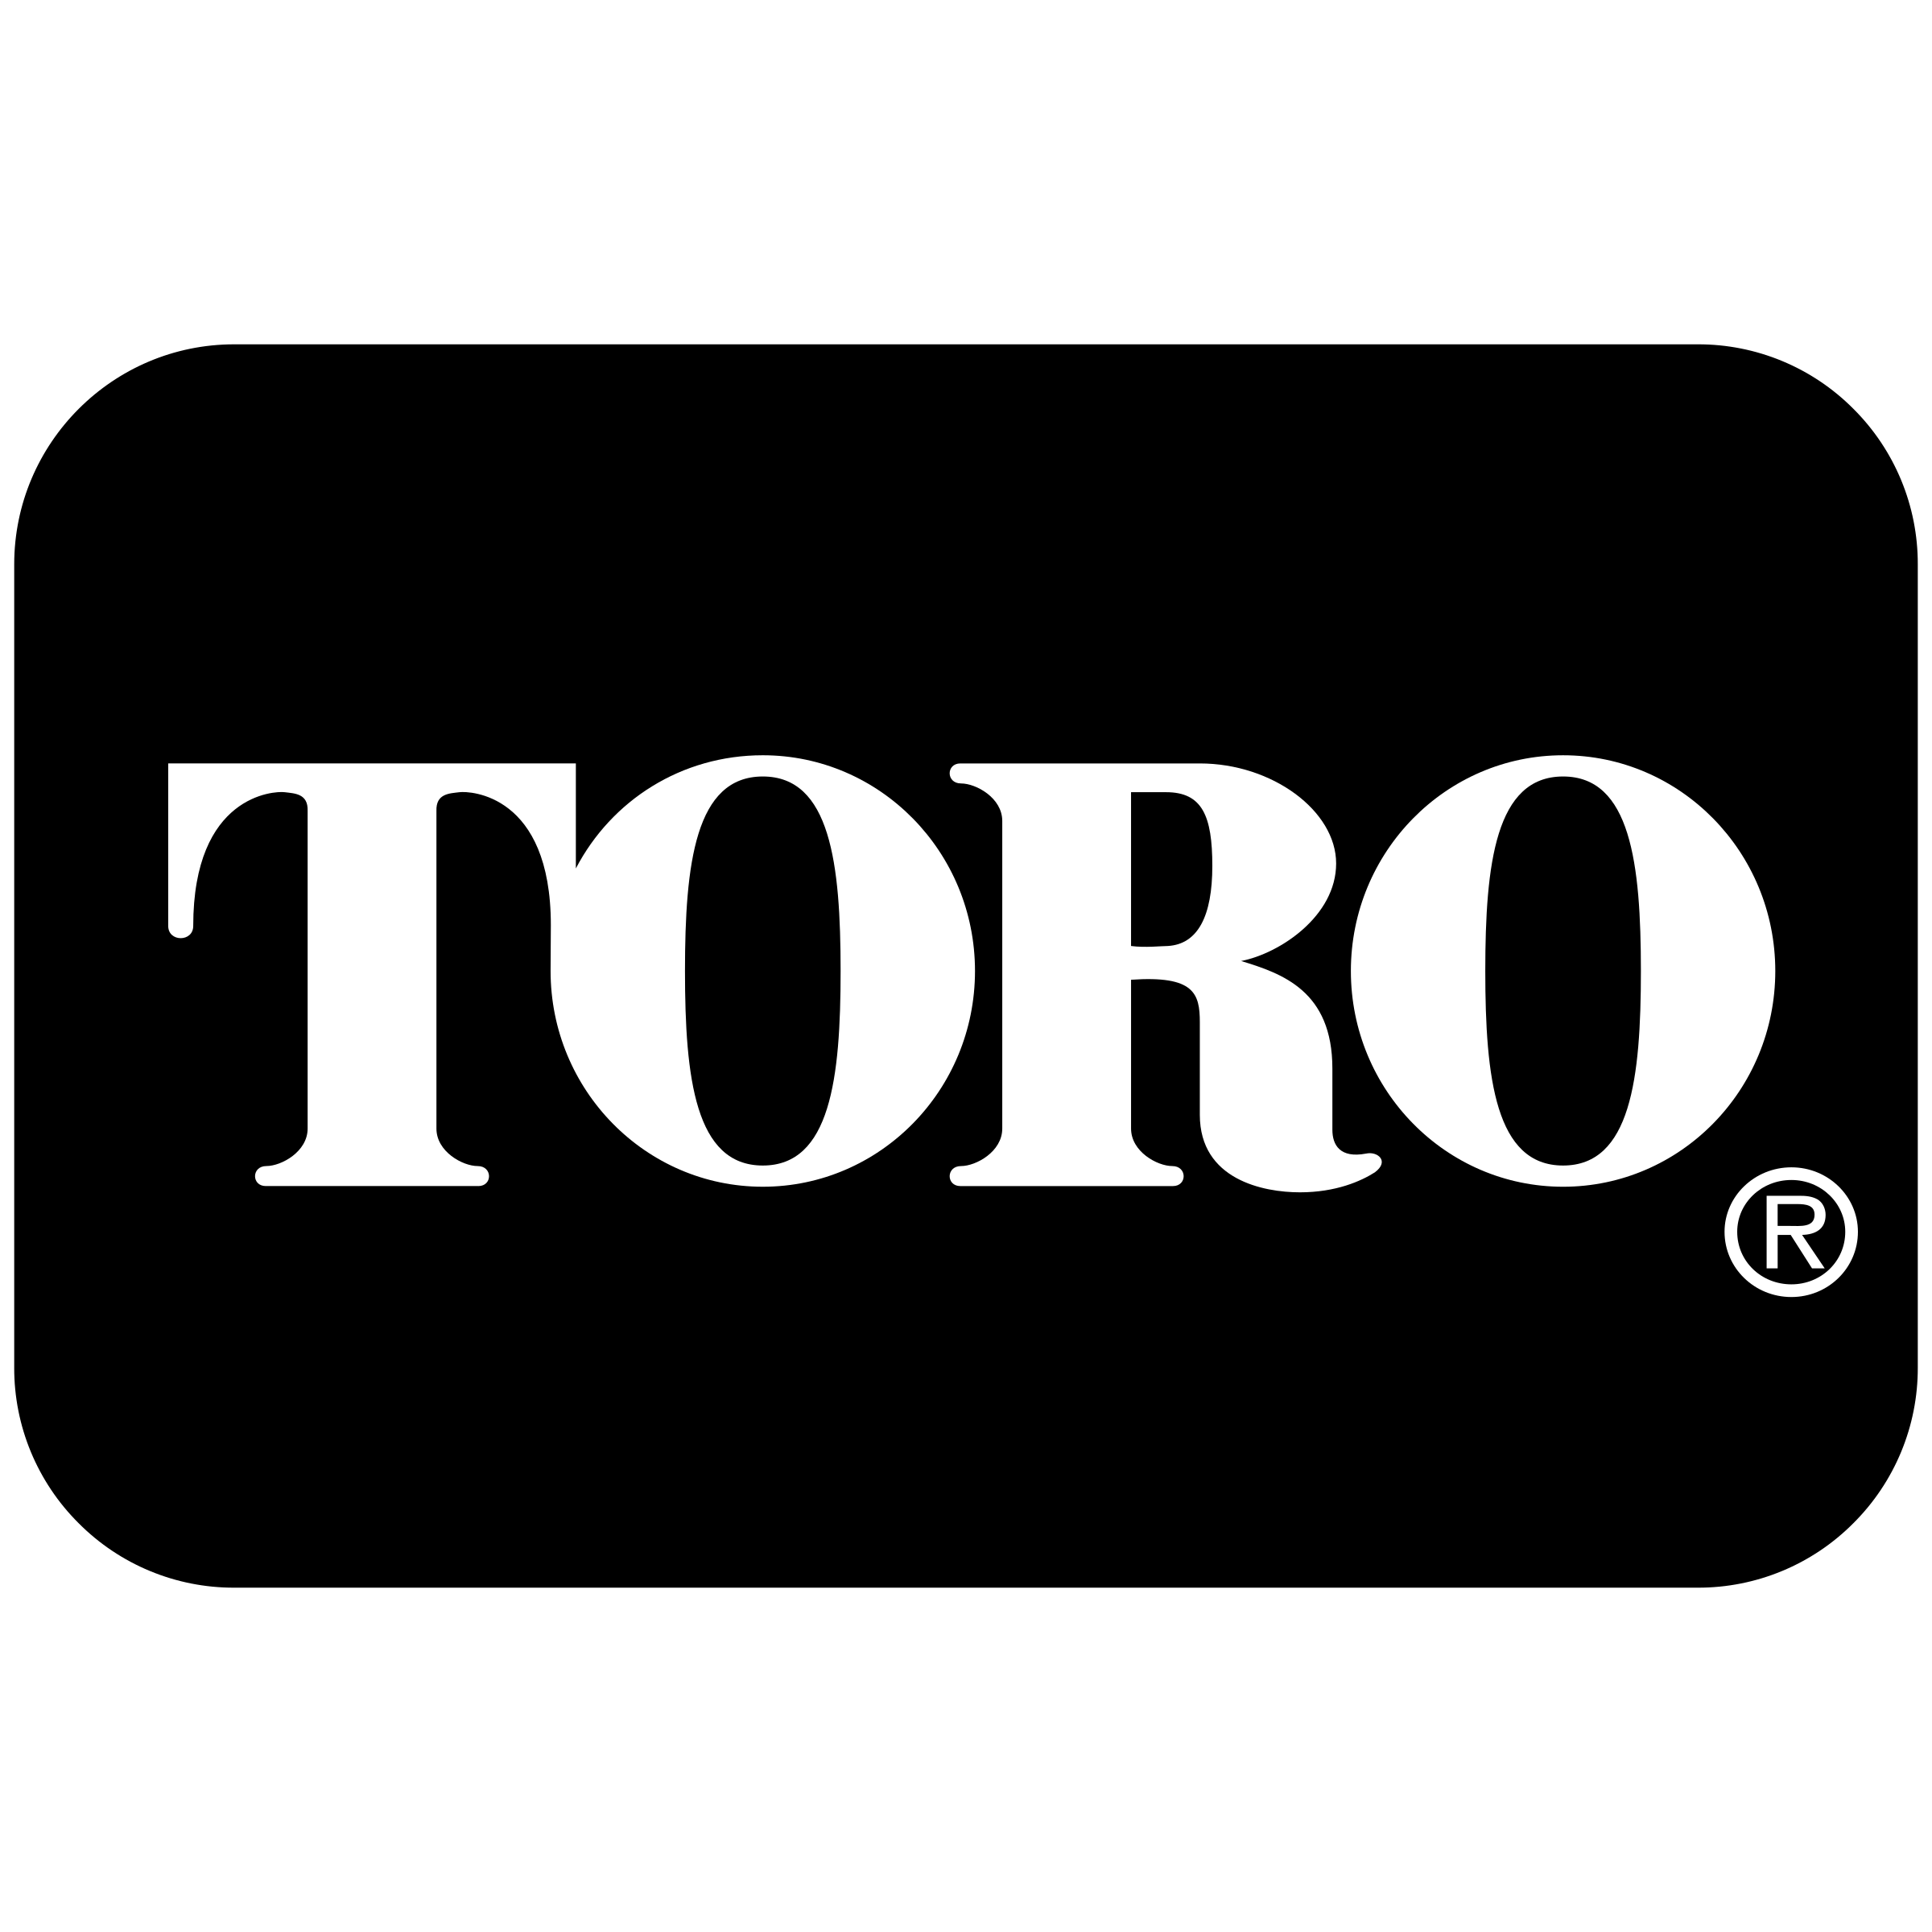 https://radtech.ca/en/wp-content/uploads/sites/6/2021/05/toro-1-logo-png-transparent.png